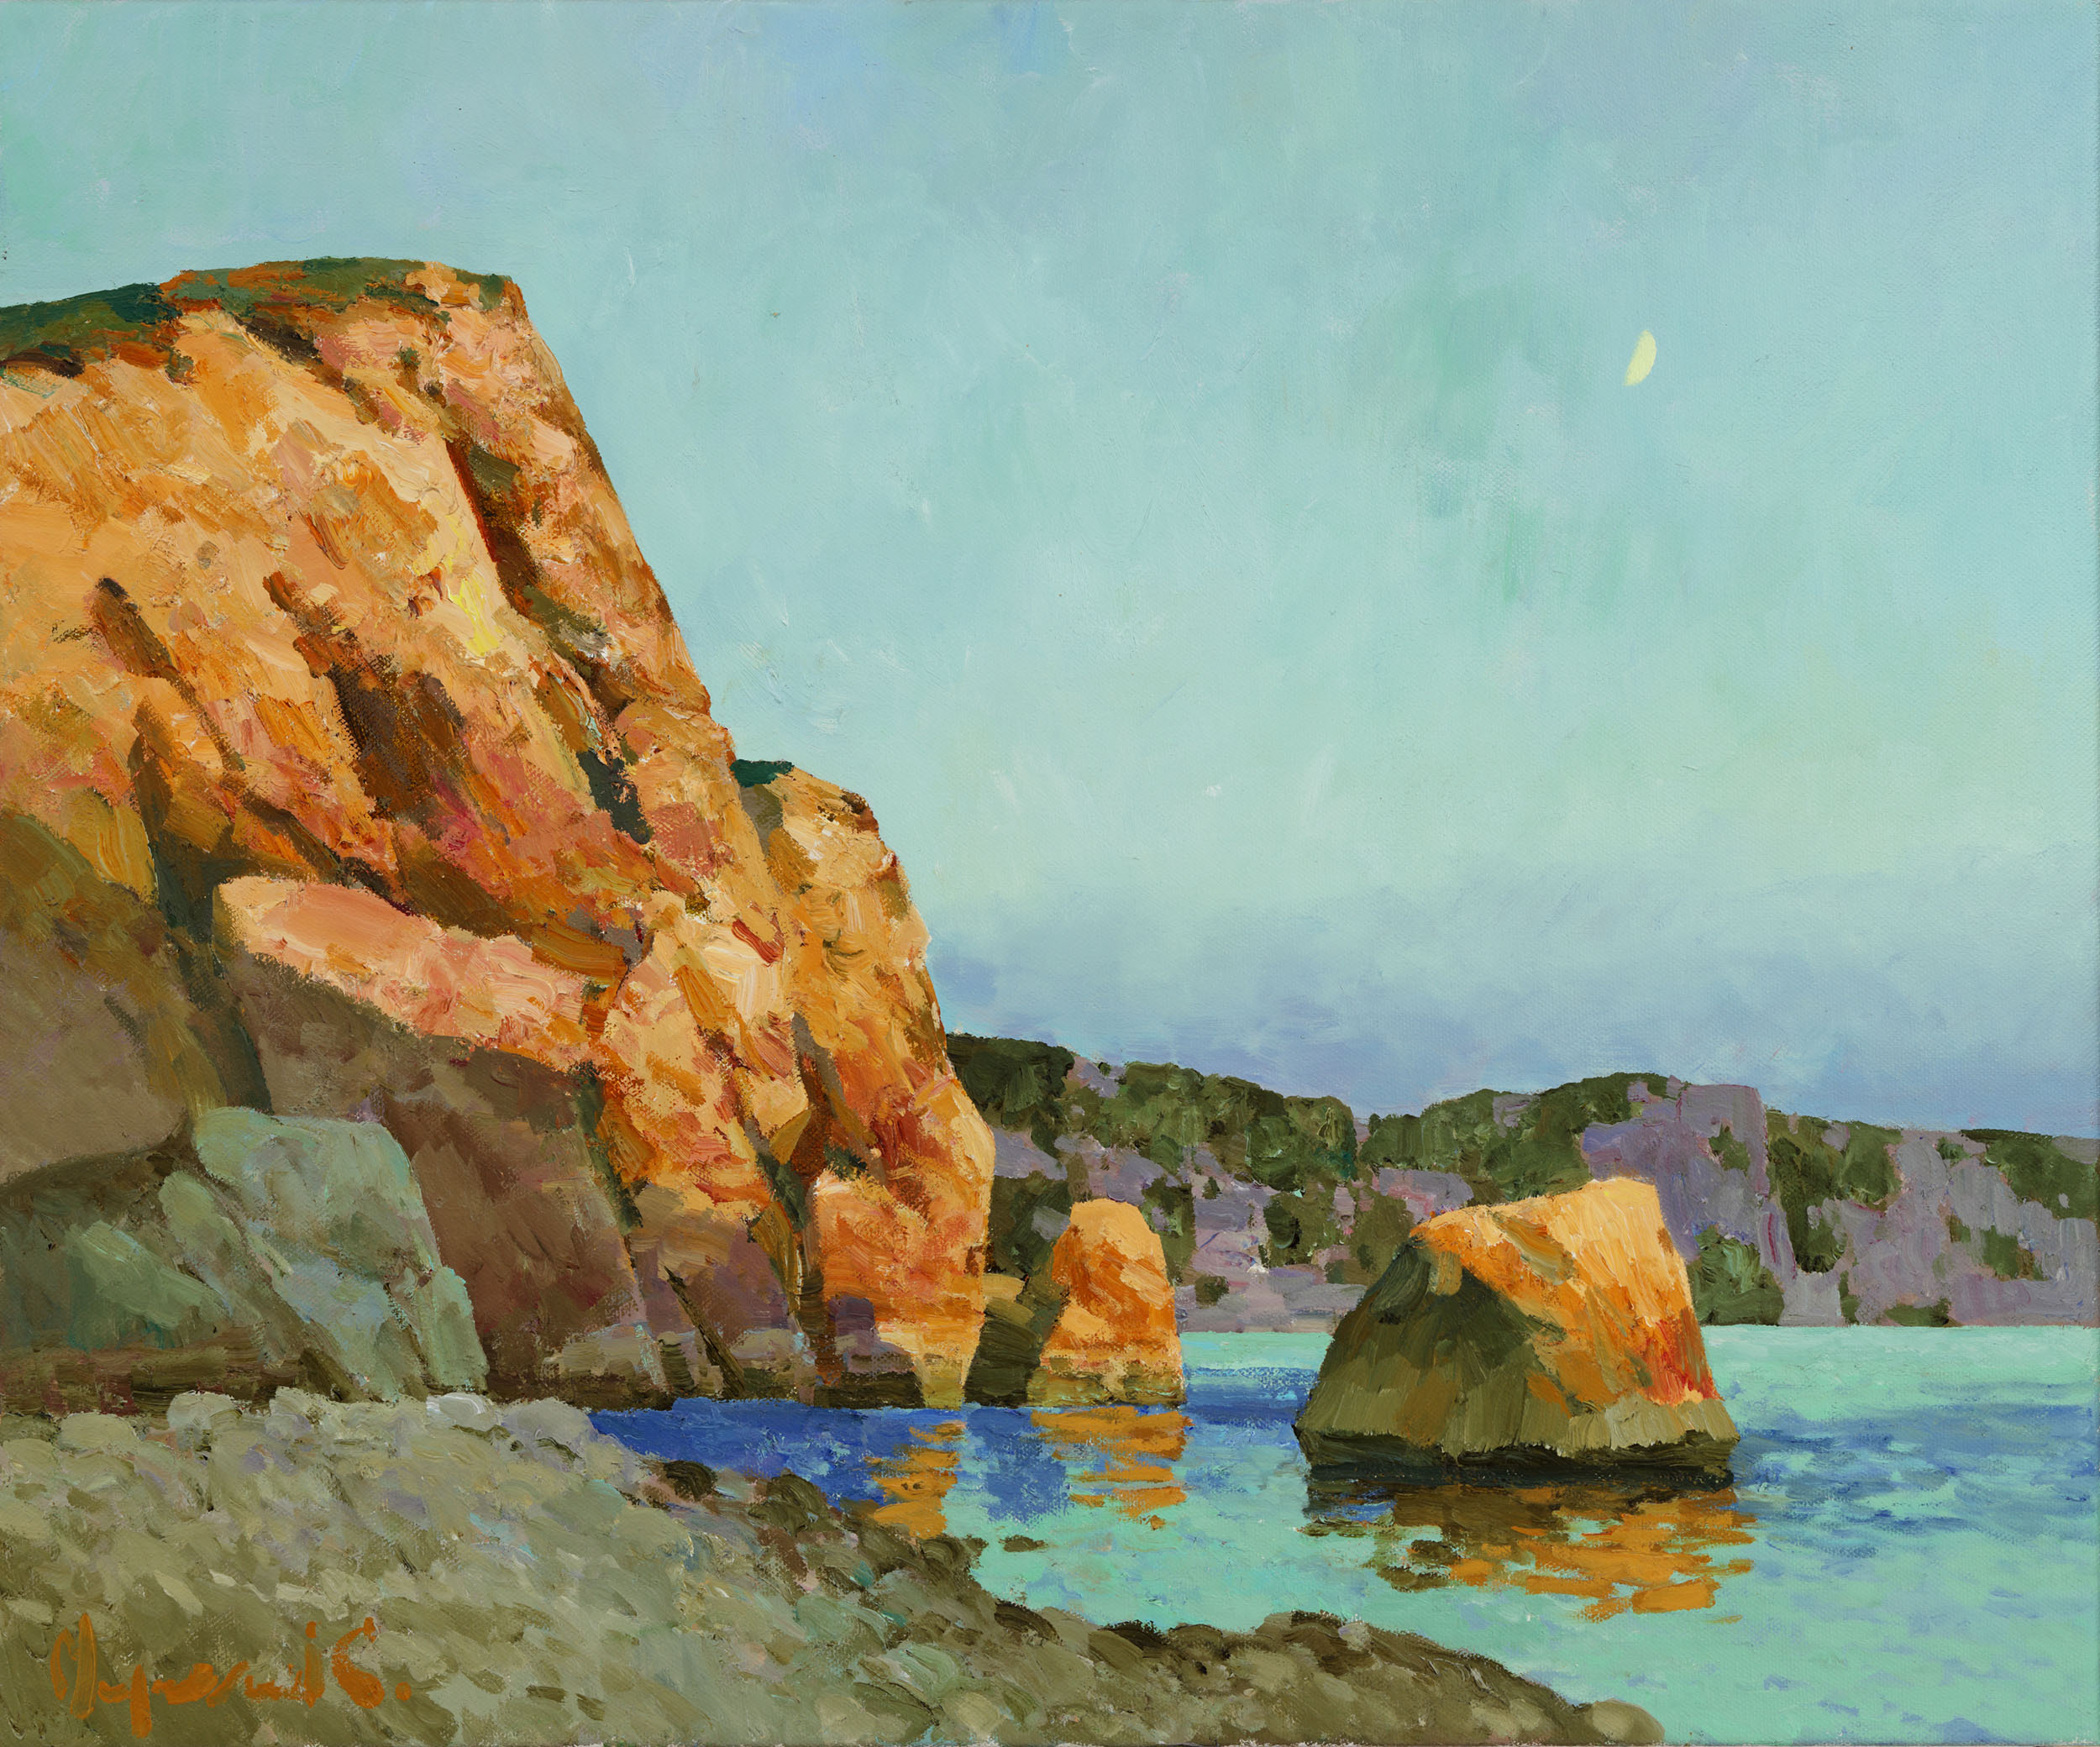 Evening at the sea - 1, Stas Miroshnikov, Buy the painting Oil